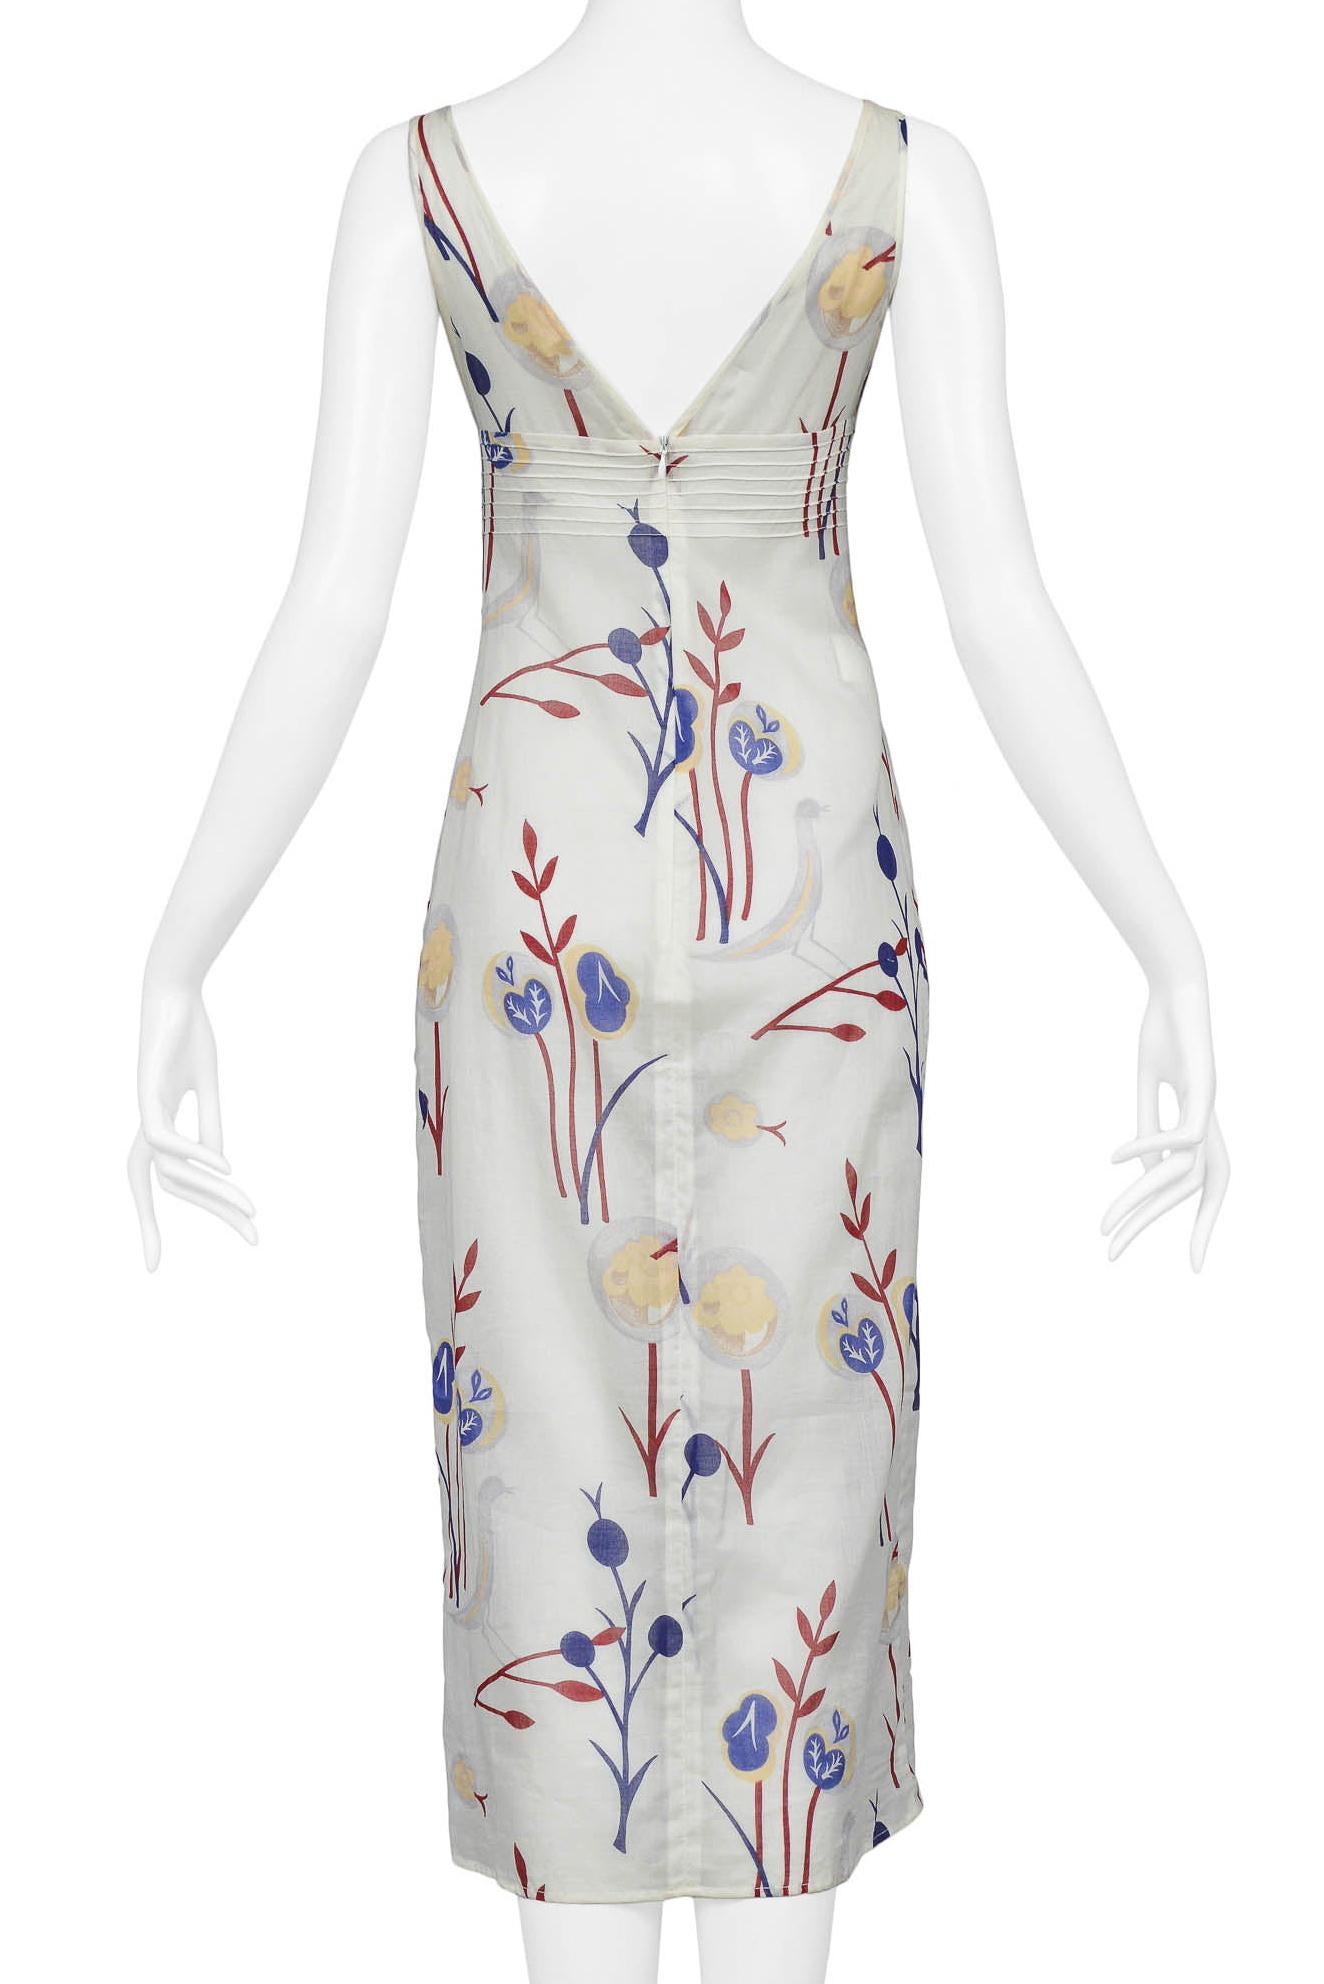 Women's Miu Miu White Floral Printed Slip Dress SS 1997